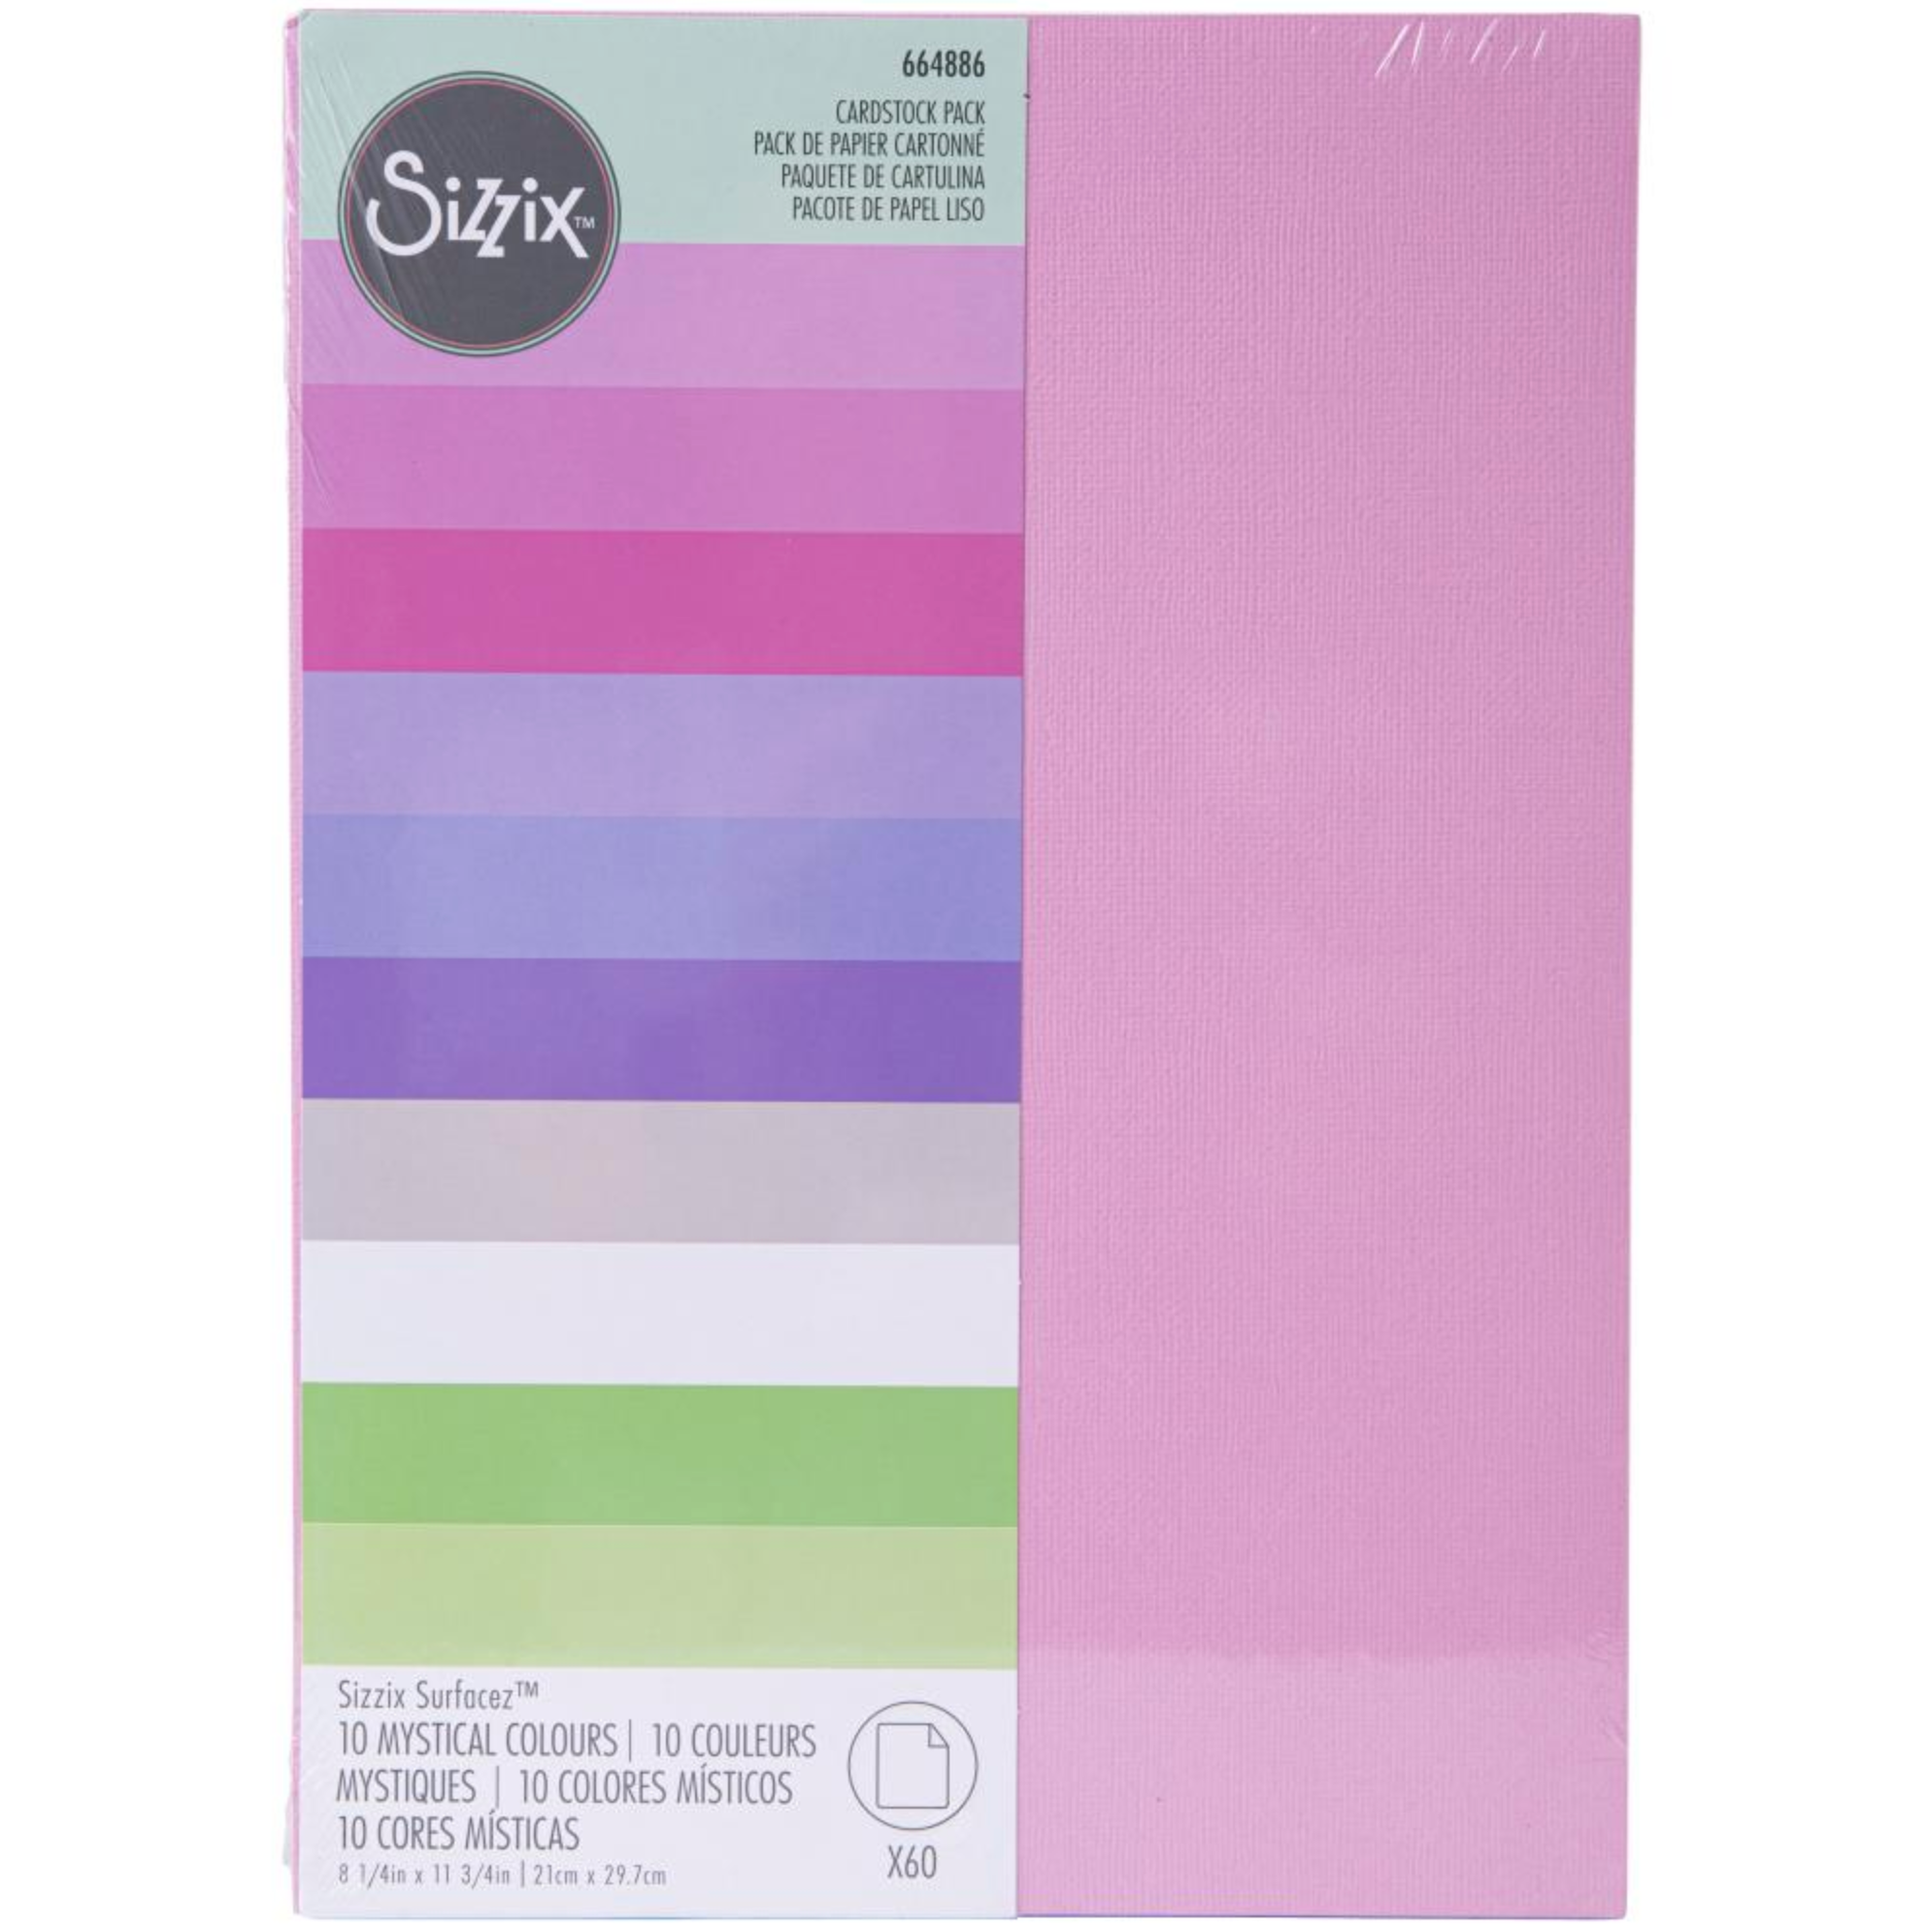 Sizzix Surfacez, Colored Cardstock 60PK - Botanical Colors